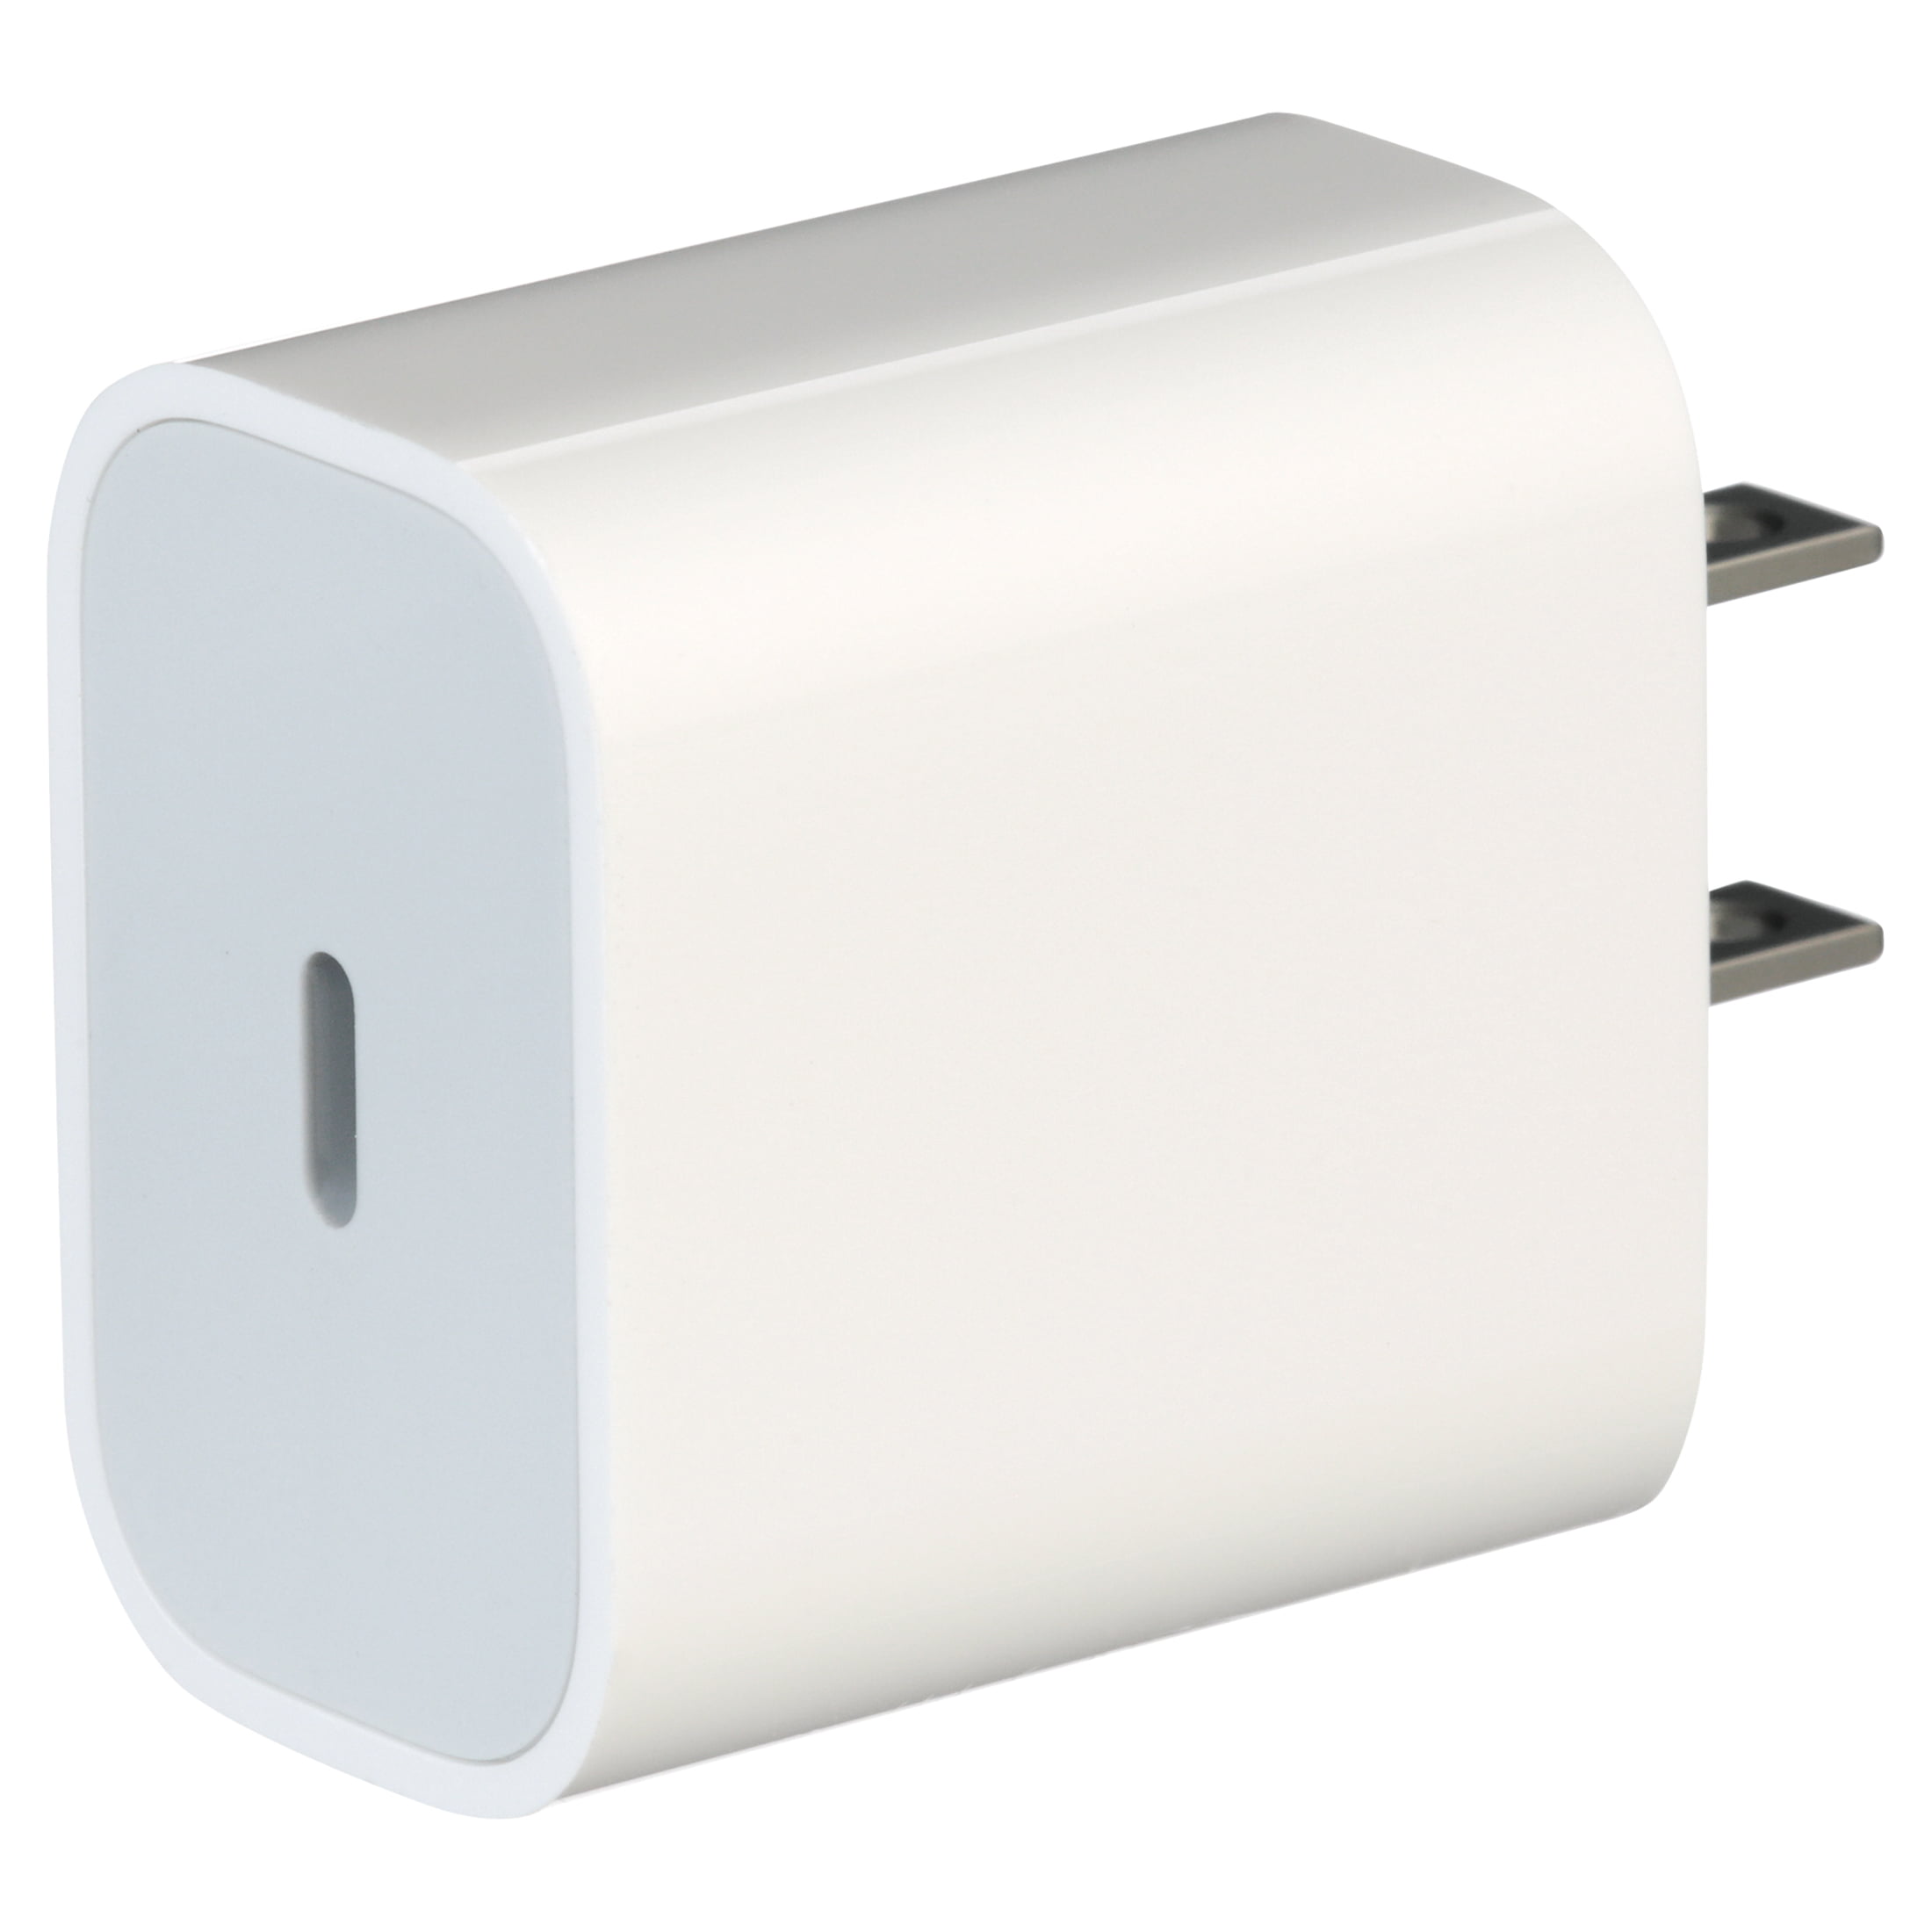 Apple 18W USB-C Power Adapter - Quick Charging - Walmart.com